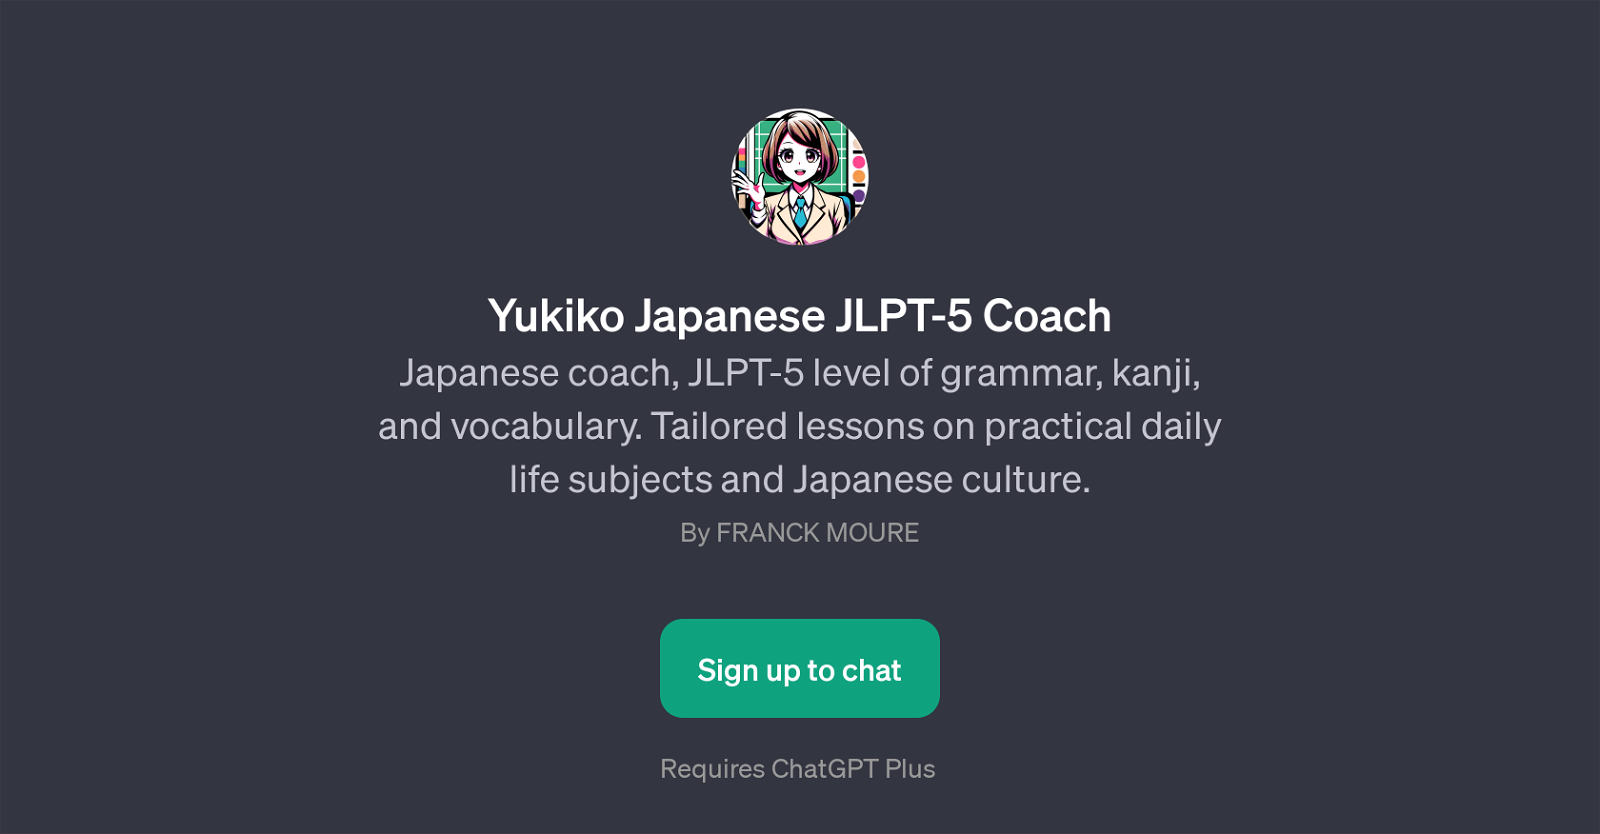 Yukiko Japanese JLPT-5 Coach website